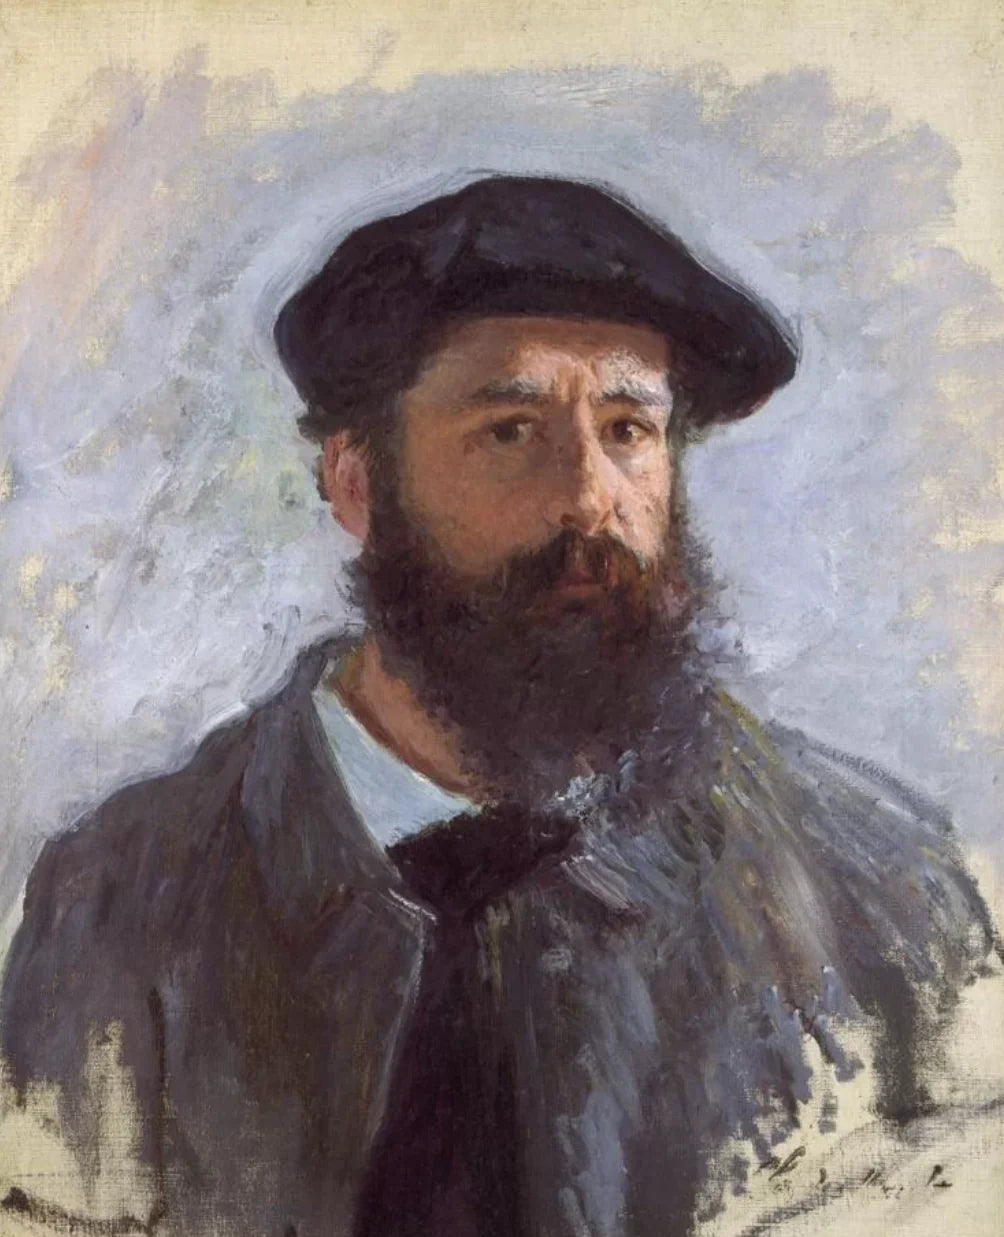 Claude Monet Self Portrait: A Deep Dive into the Artist's Personal Perspective